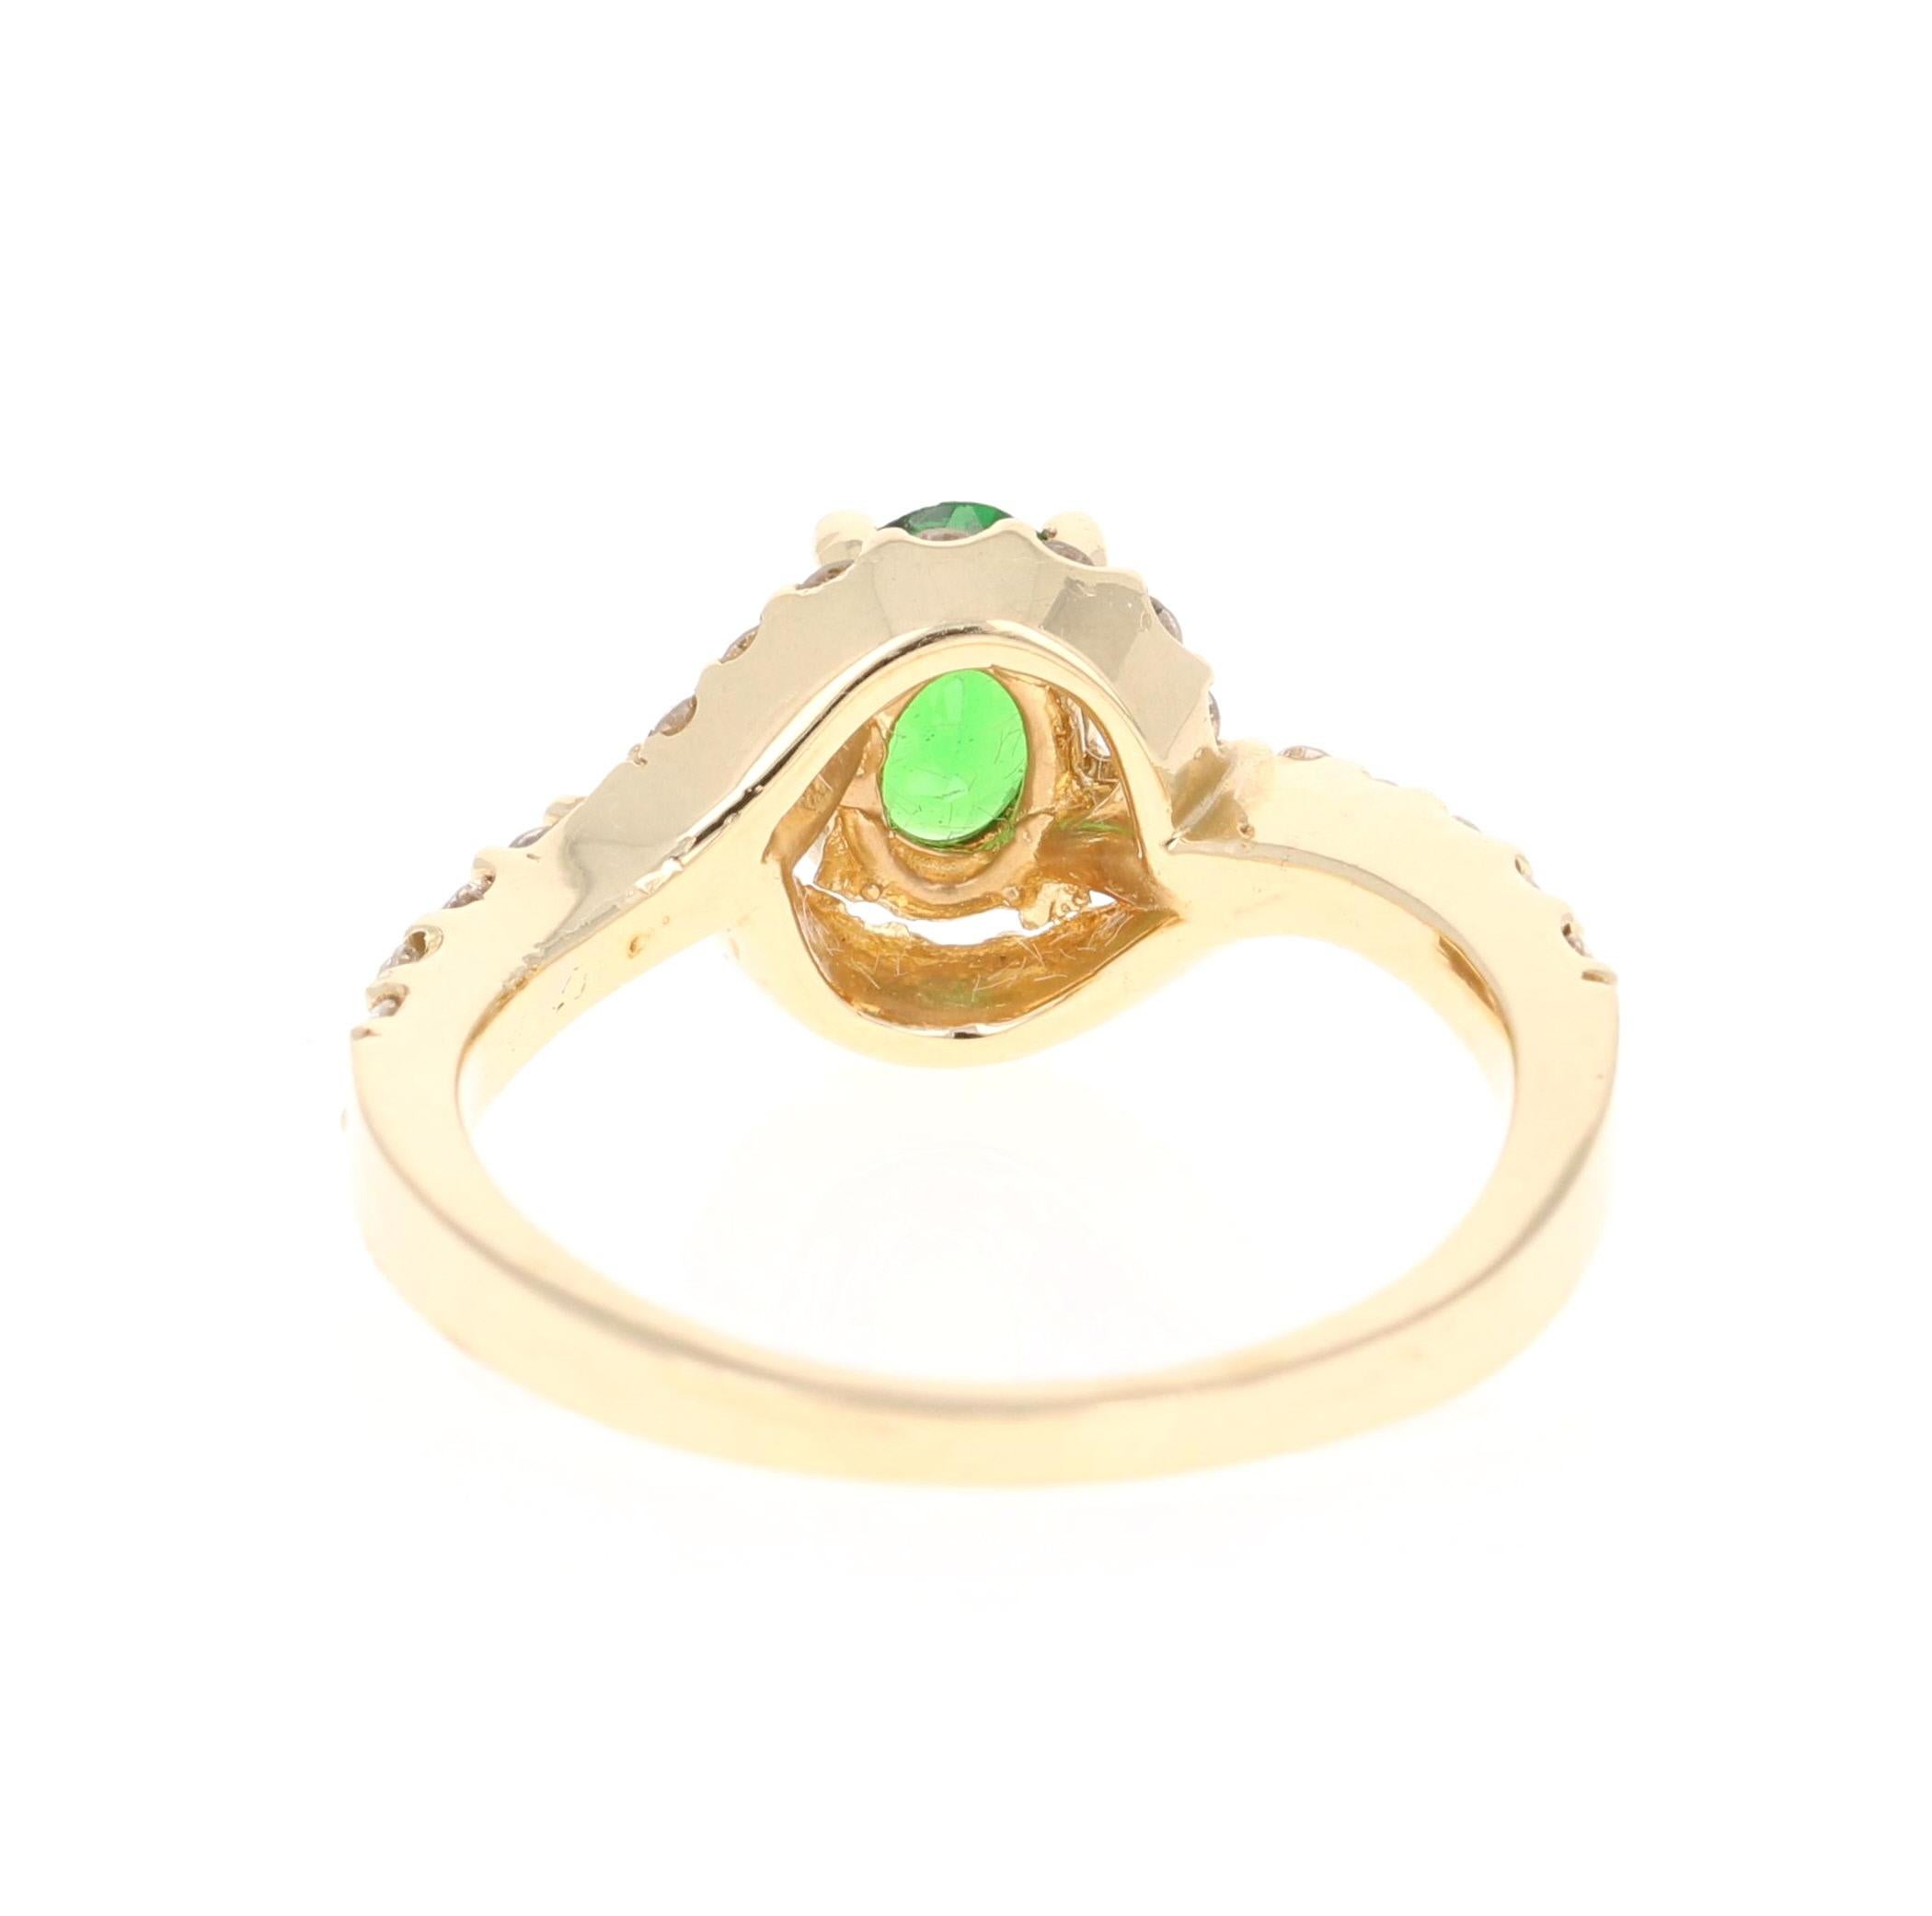 Oval Cut 1.22 Carat Tsavorite Garnet Diamond 14 Karat Yellow Gold Ring For Sale